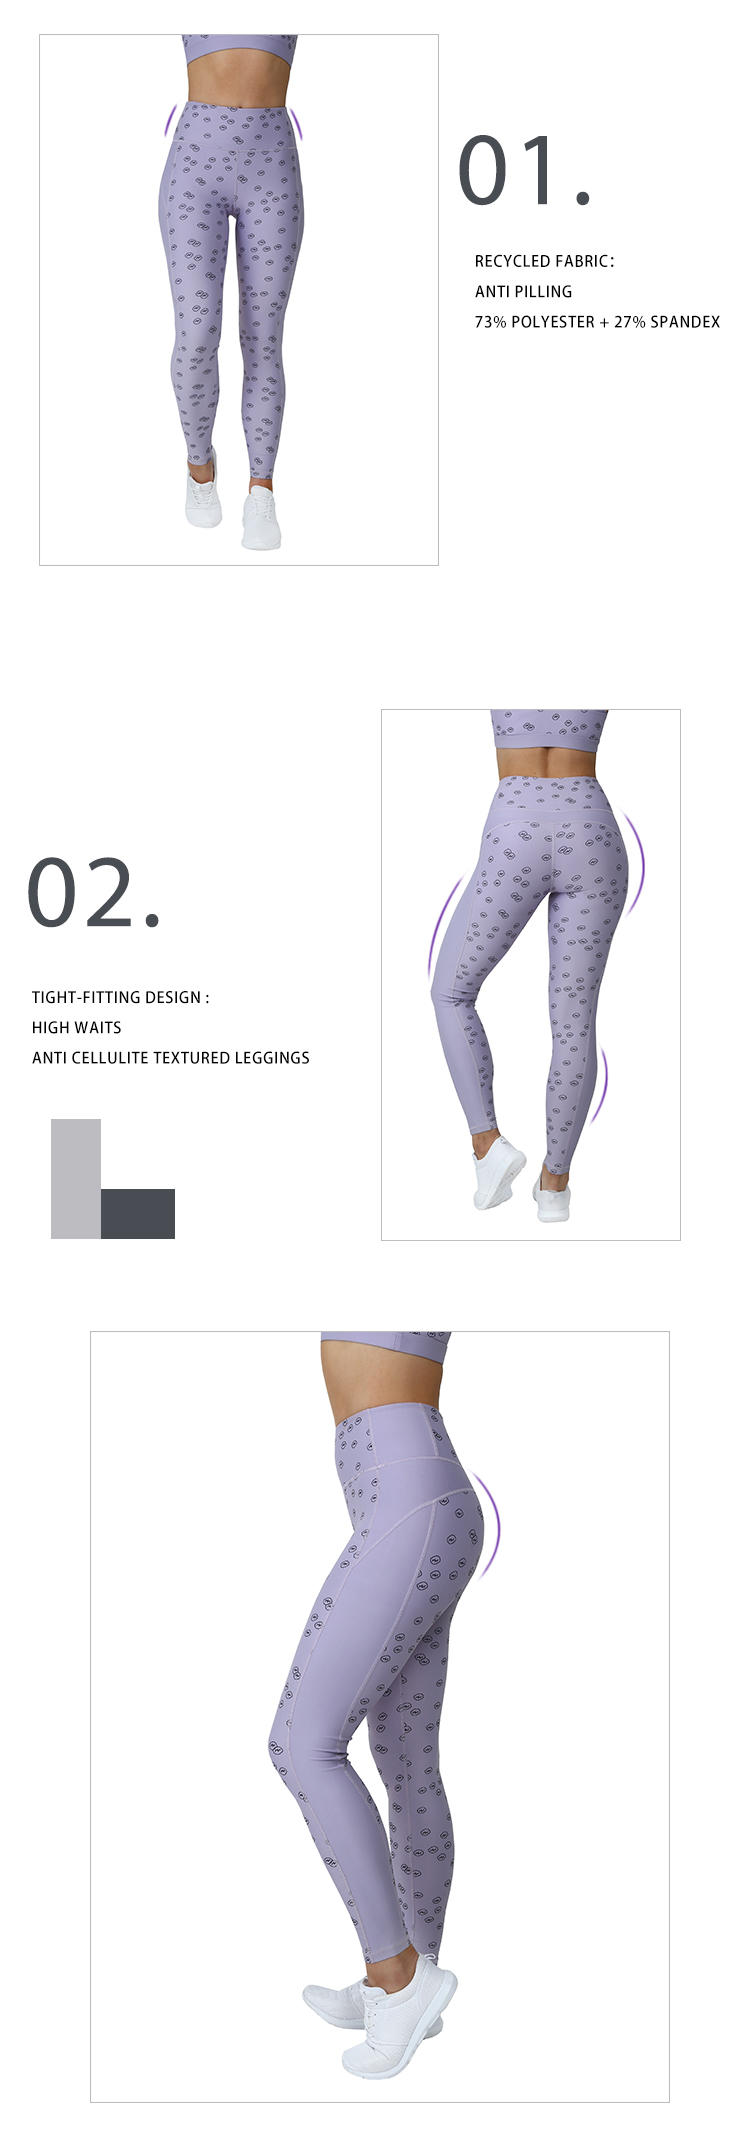 INGOR yoga leggings outfit marketing for gym